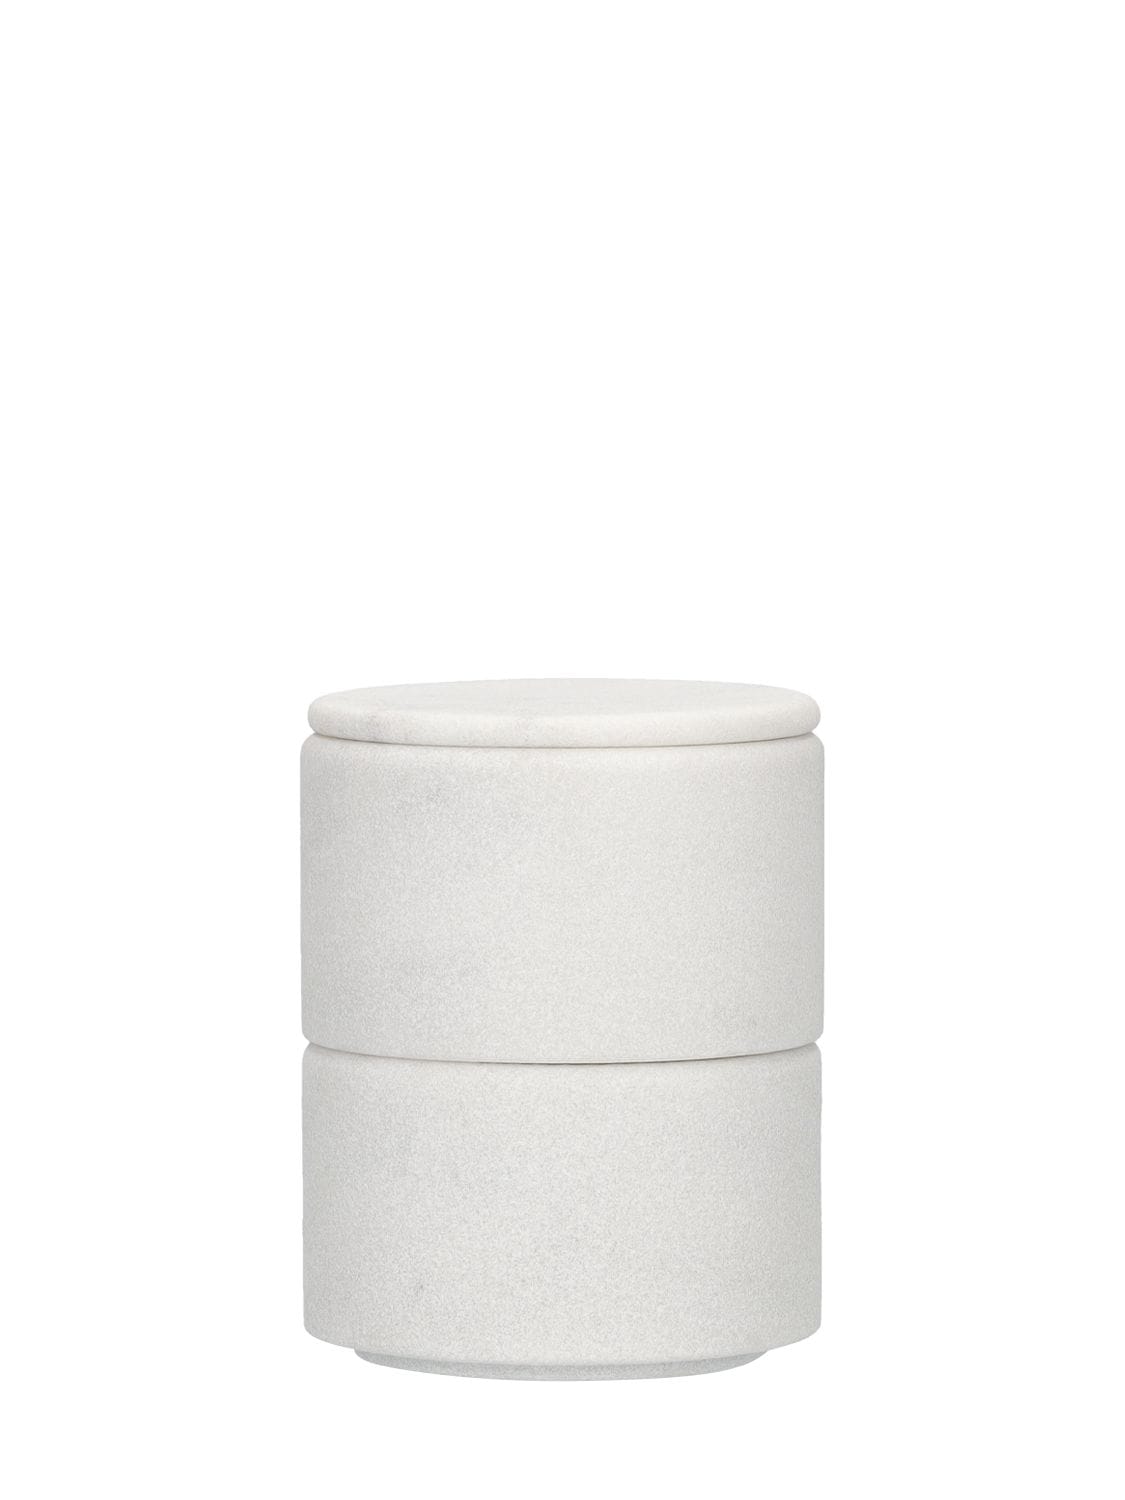 Salvatori Sale & Pepe Marble Containers W/ Lids In White